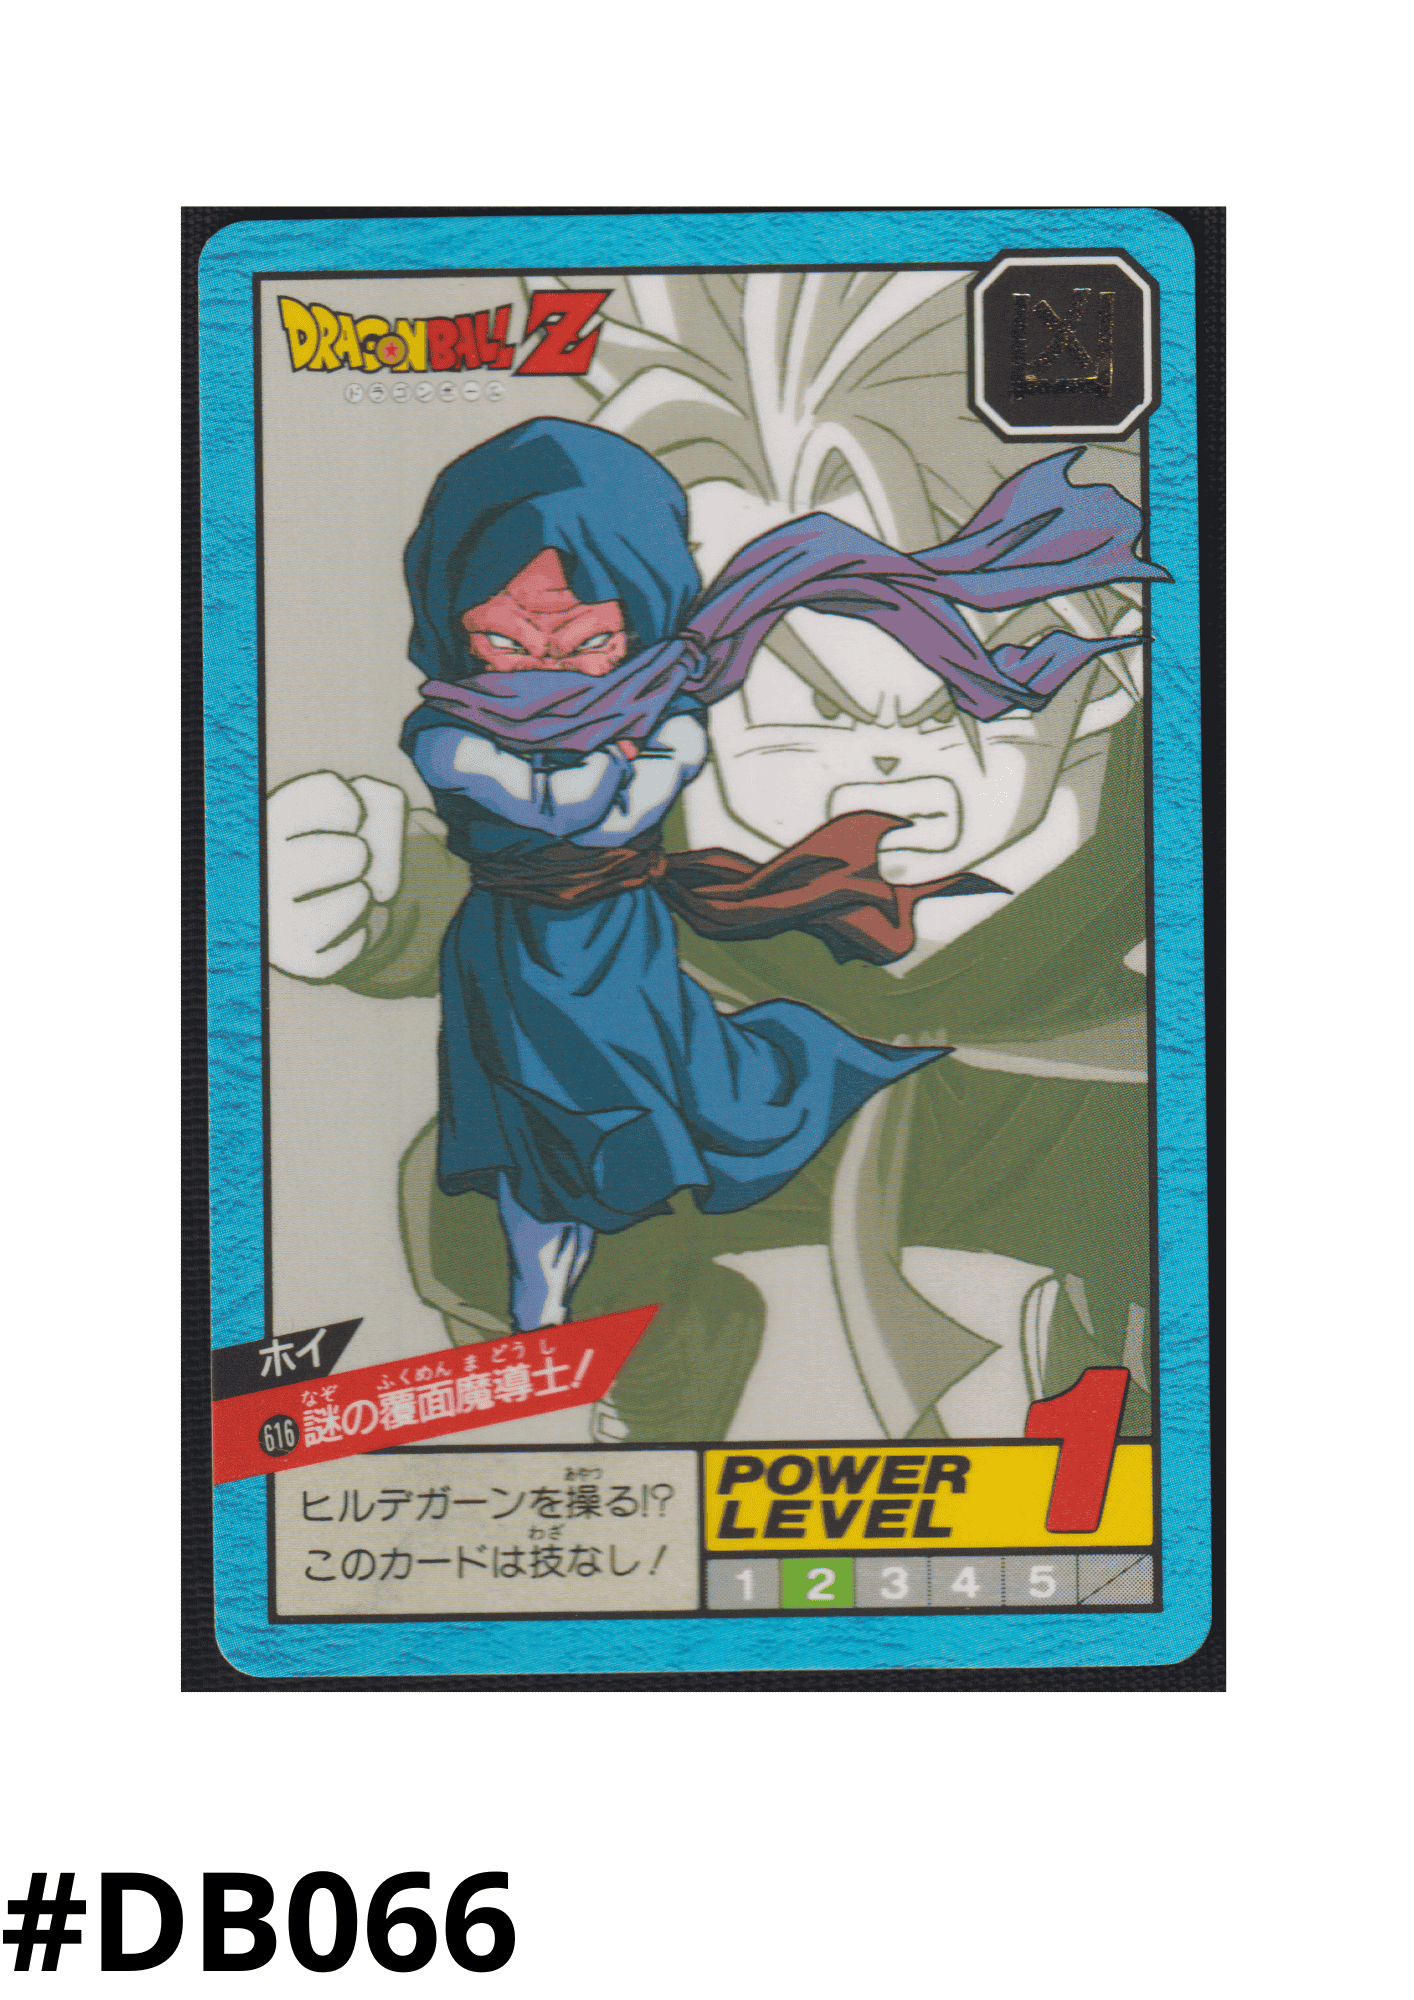 Hoi No.616 | Carddass Super Battle ChitoroShop